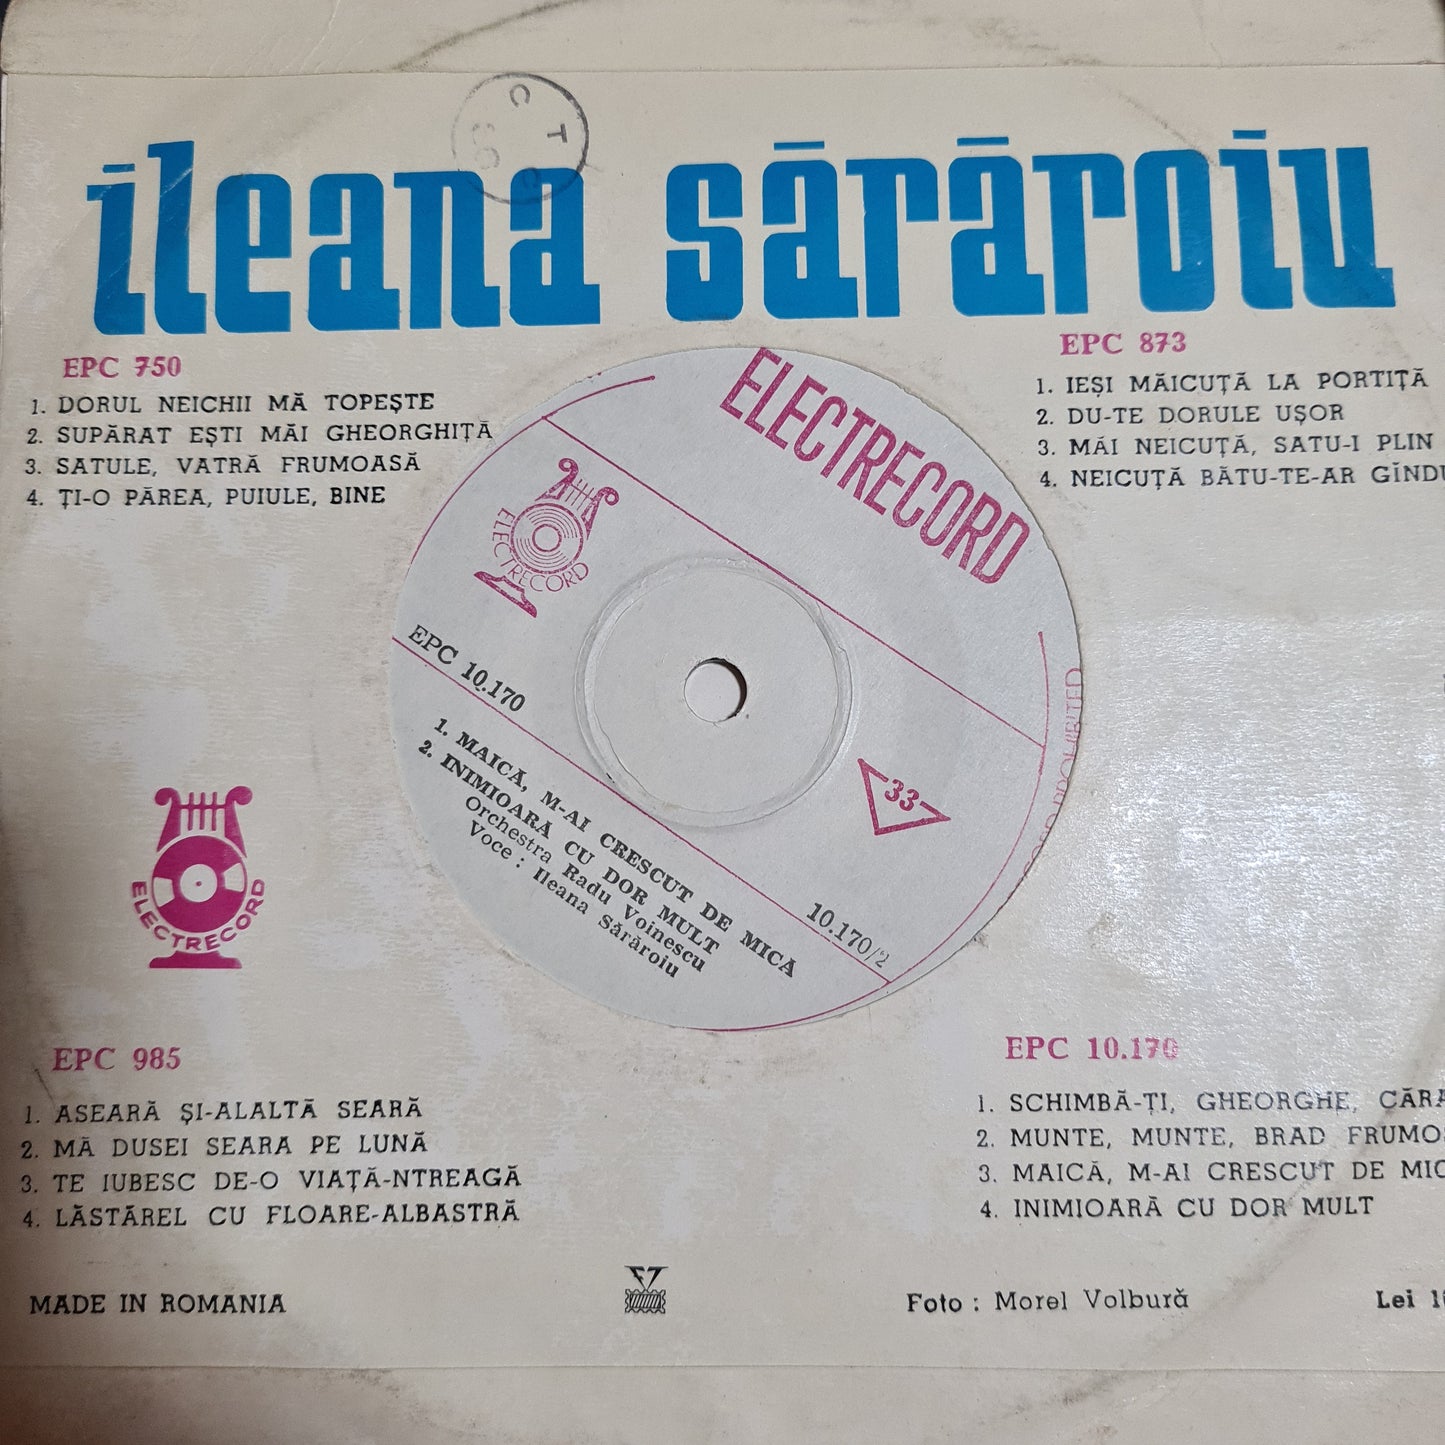 Ileana Sararoiu - Ileana Sararoiu 21616 Vinyl Singles VINYLSINGLES.NL